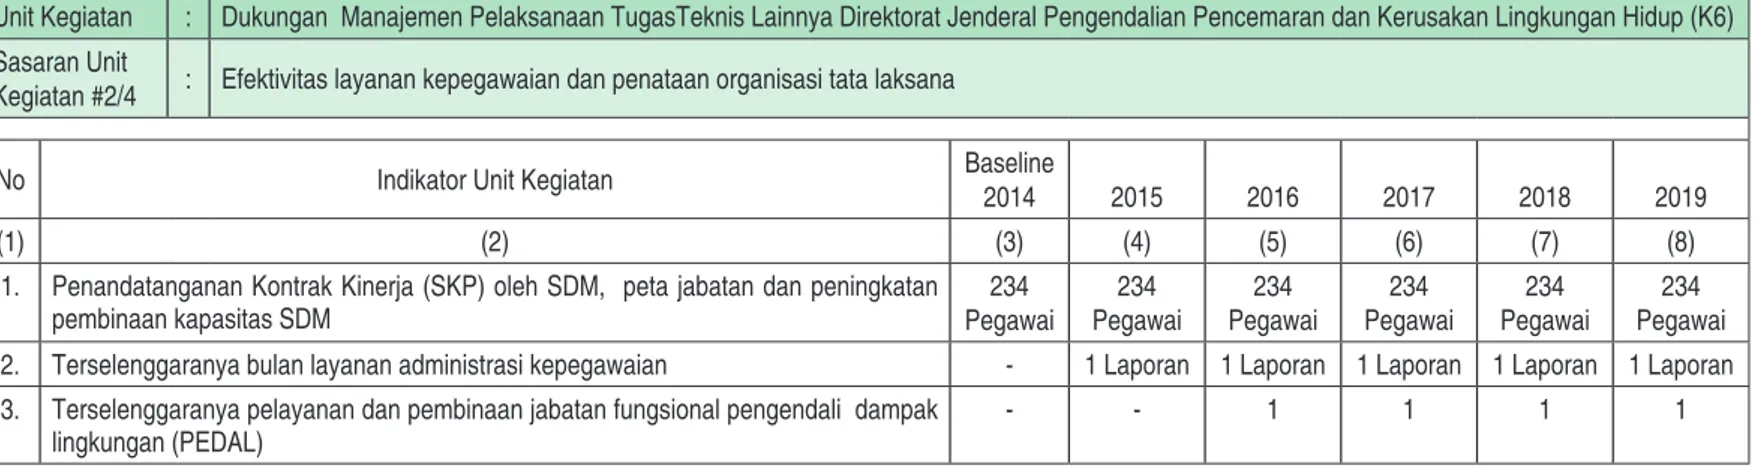 Tabel 19. Sekretariat Ditjen PPKL : Sasaran Unit Kerja # 2/4